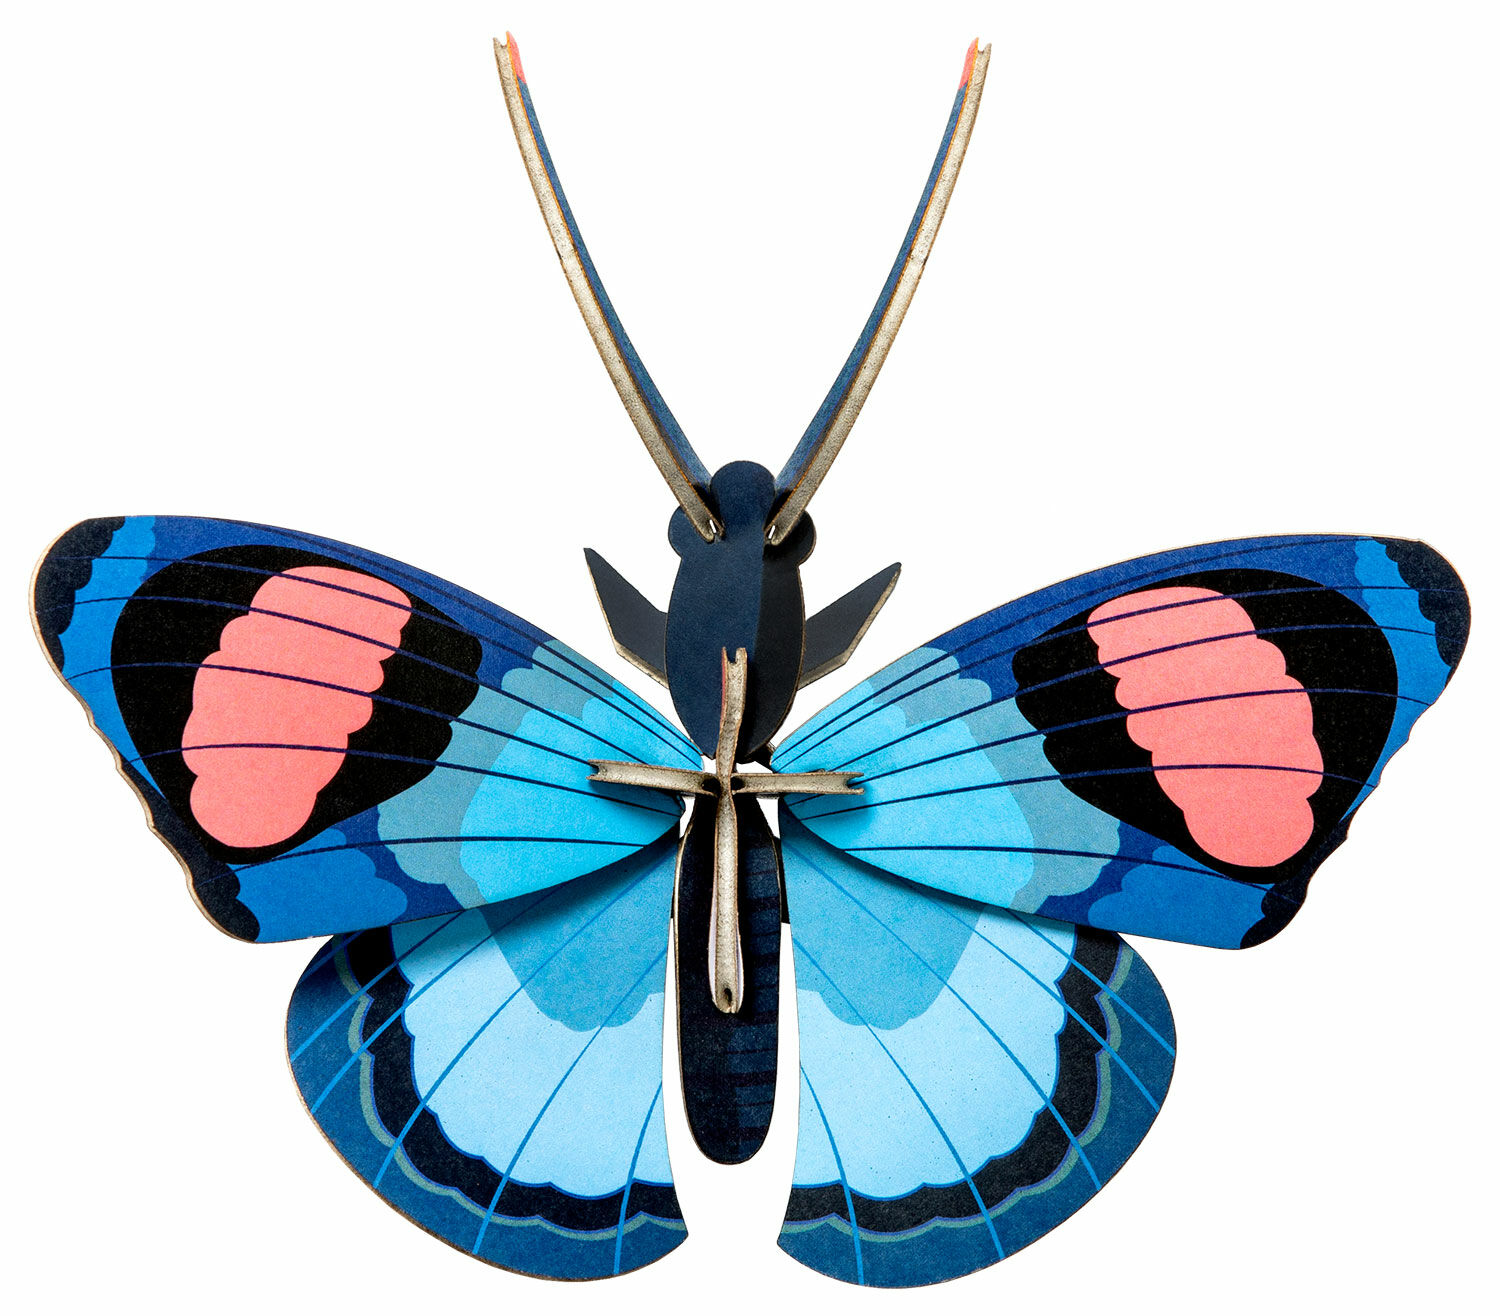 3D-Wandobjekt "Peacook Butterfly" aus recyceltem Karton, DIY von studio ROOF